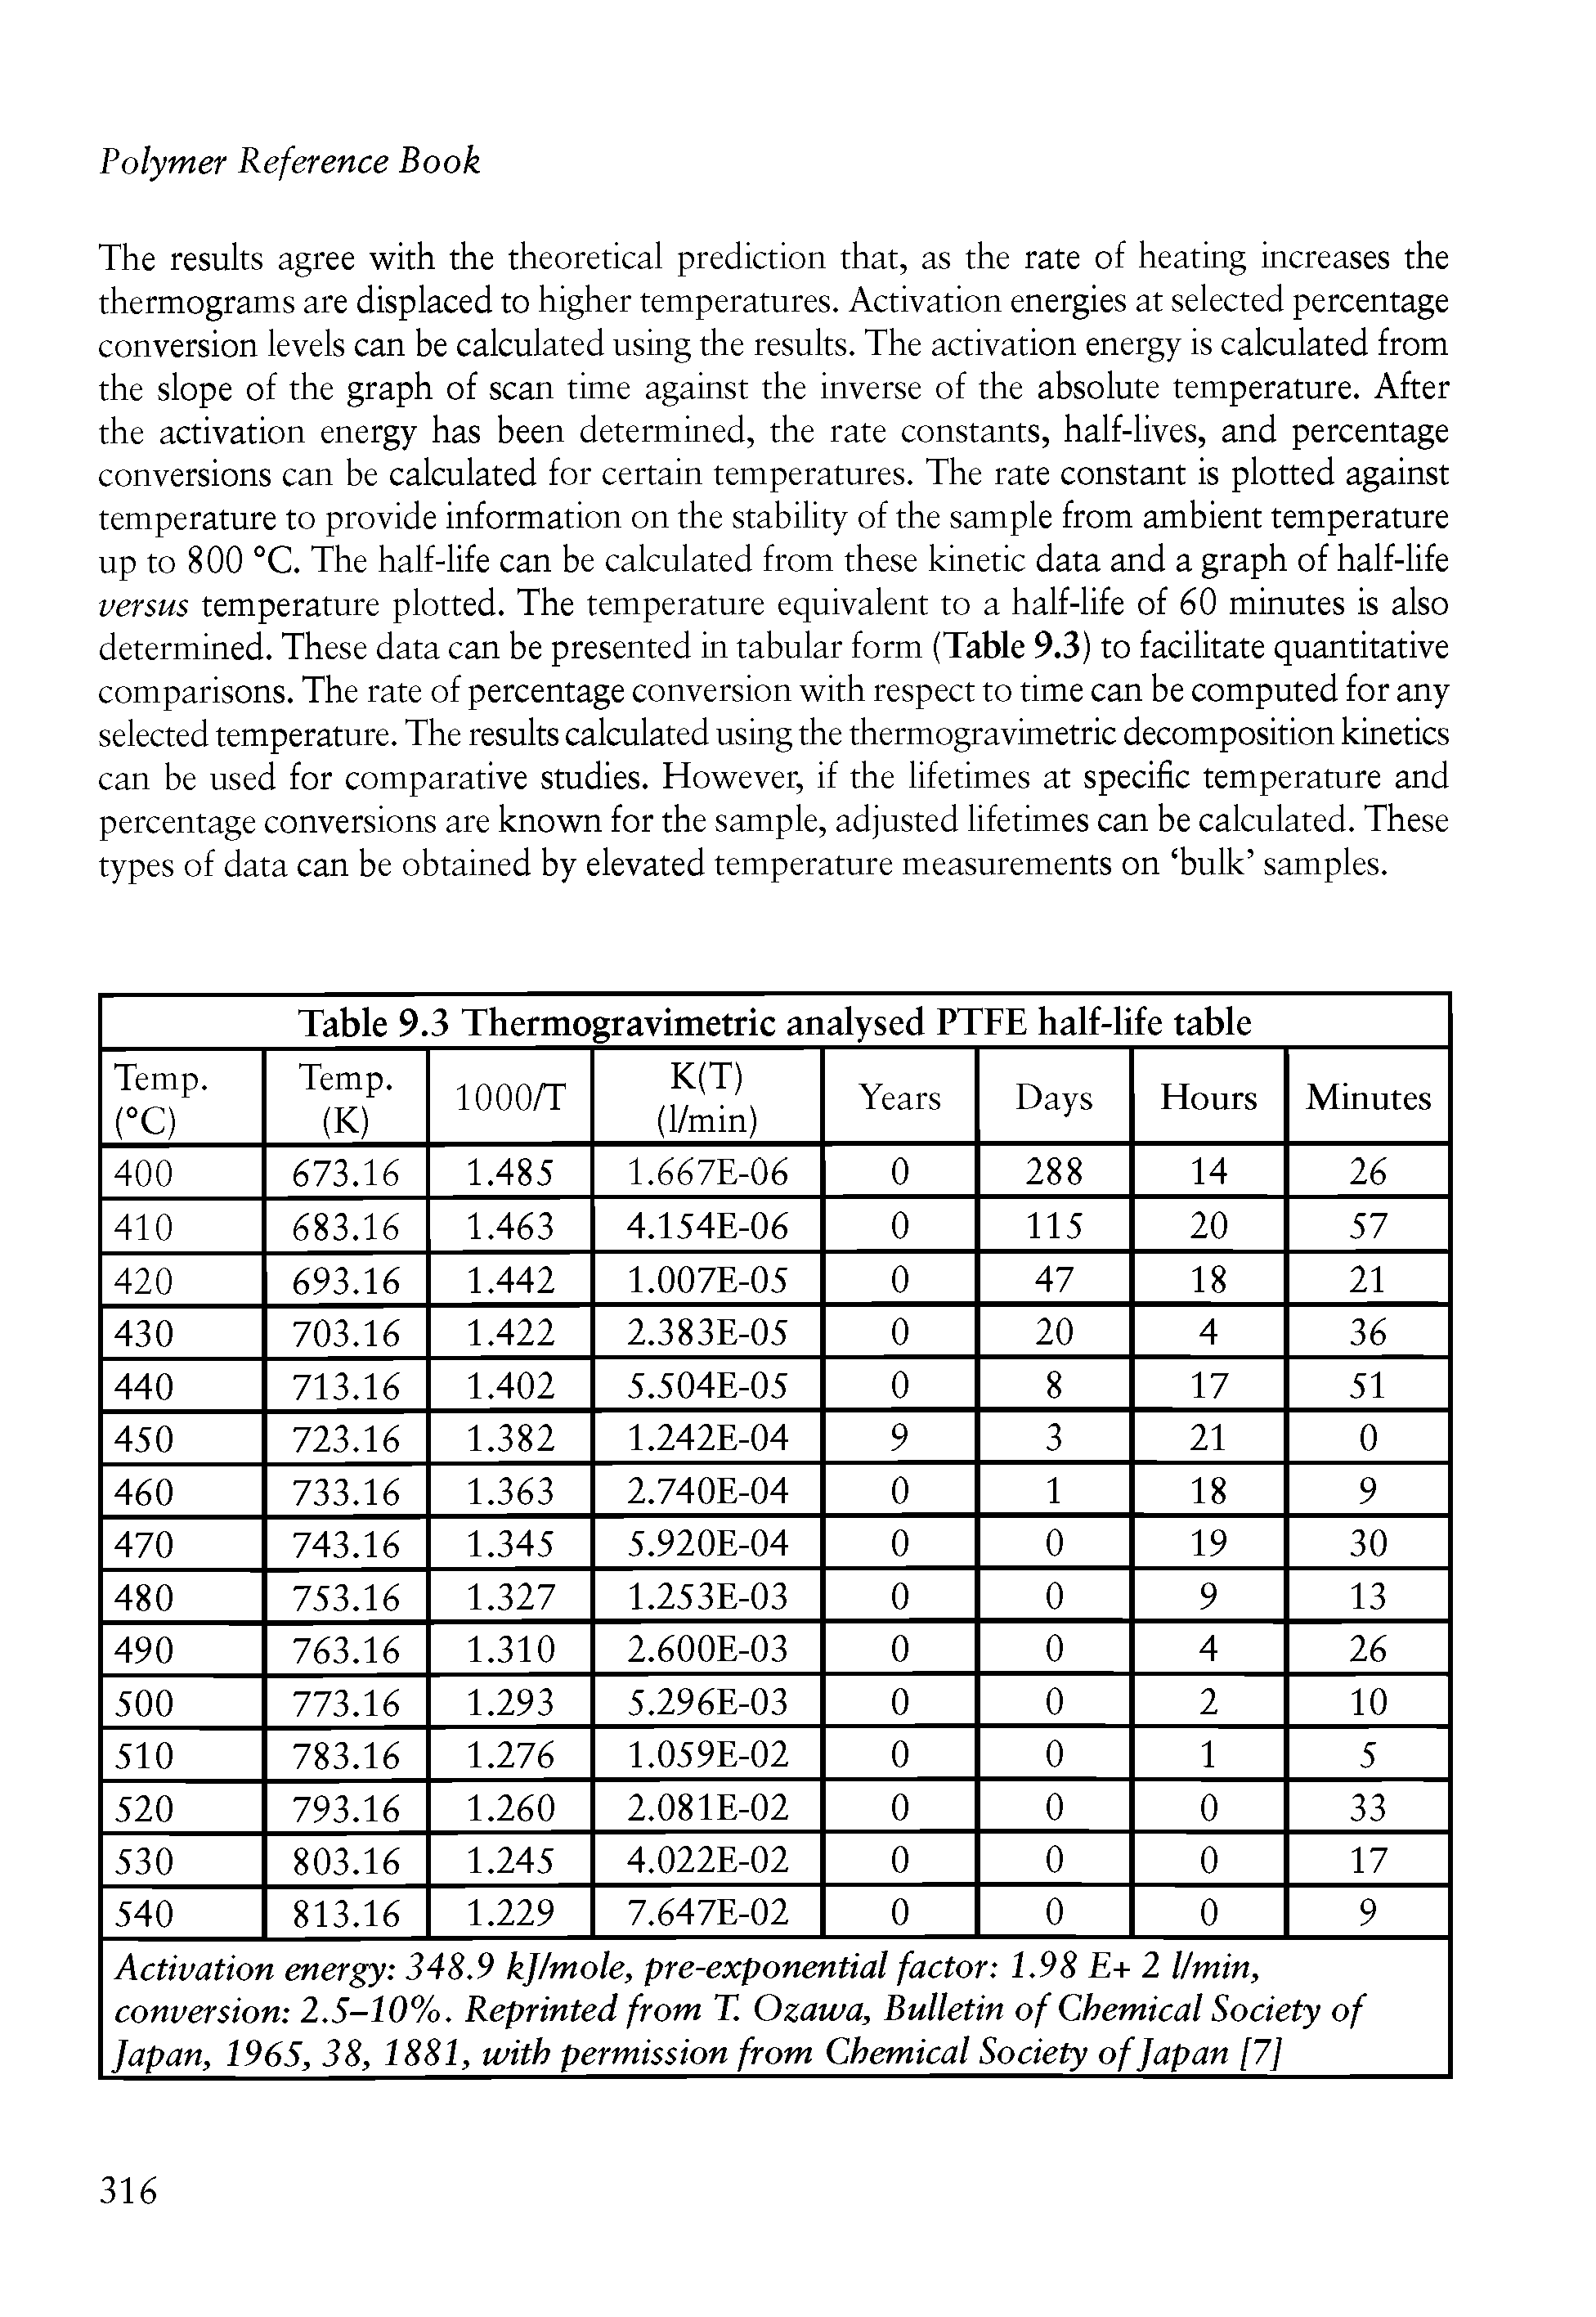 Table 9.3 Thermo gravimetric analysed PTFE half-life table ...